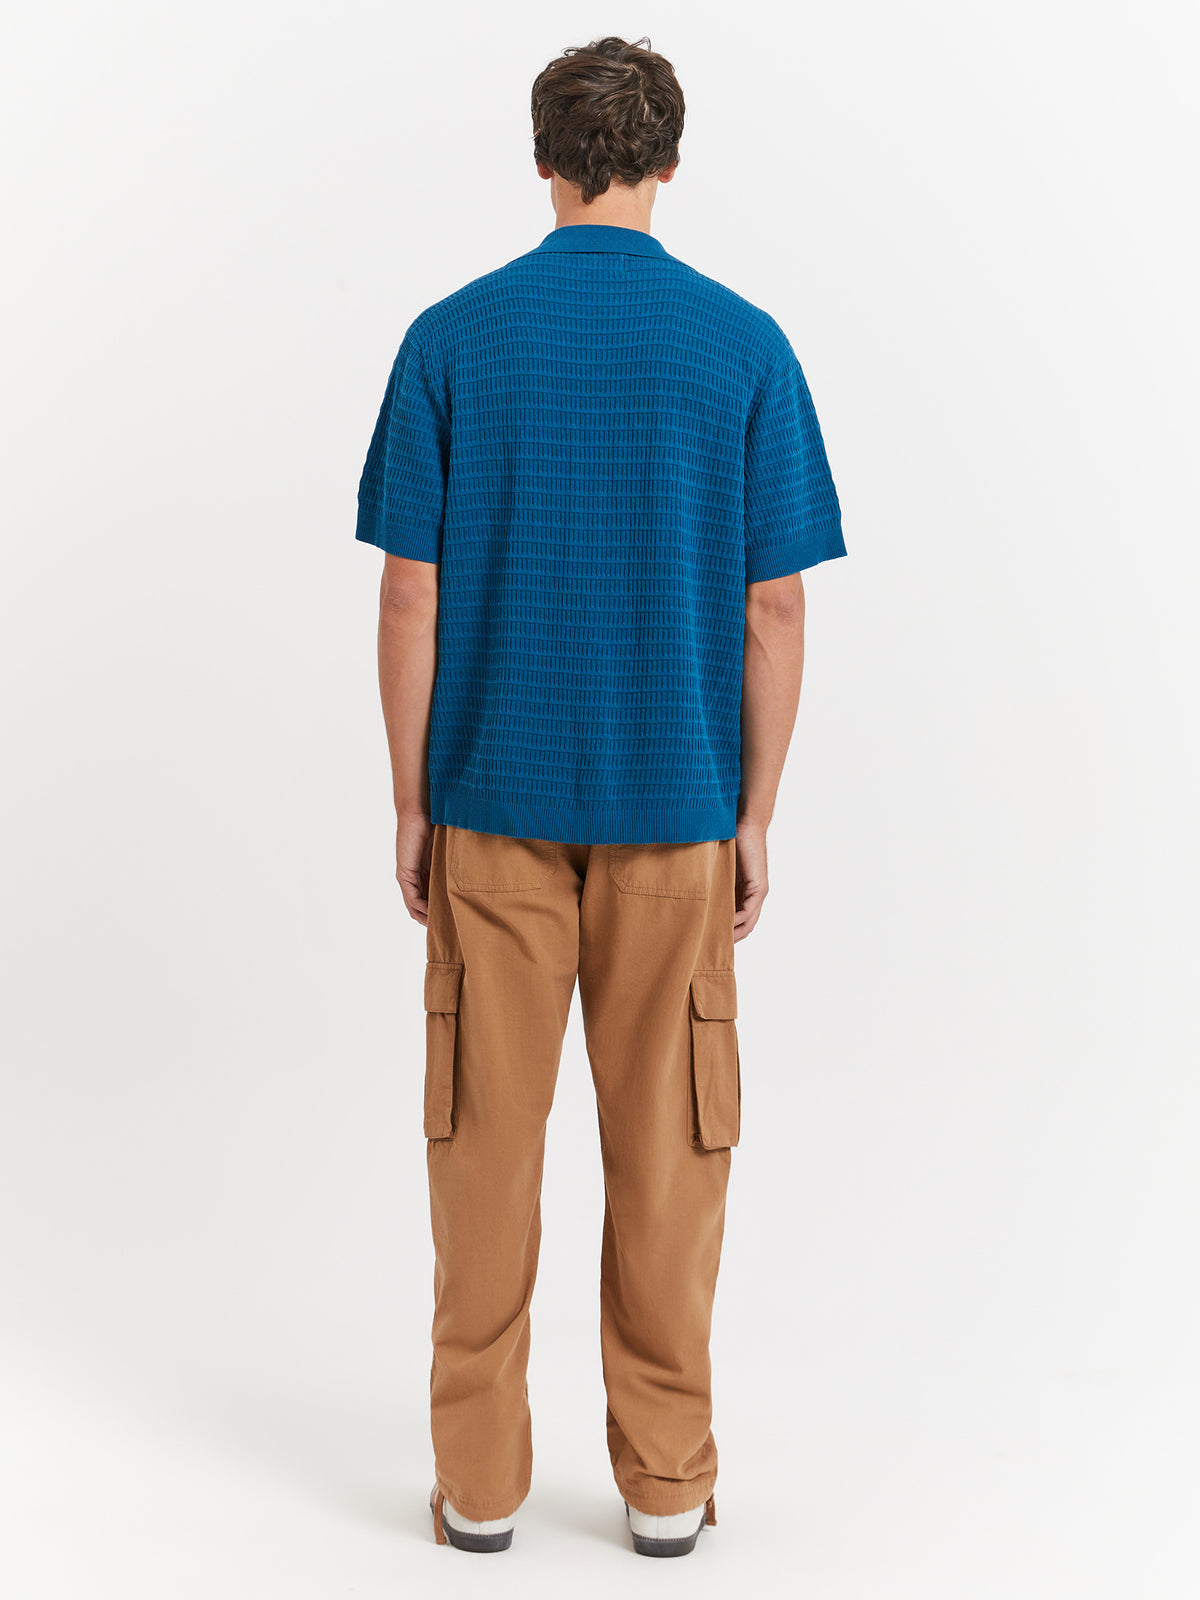 Zanito Knit Shirt in Aegean Blue